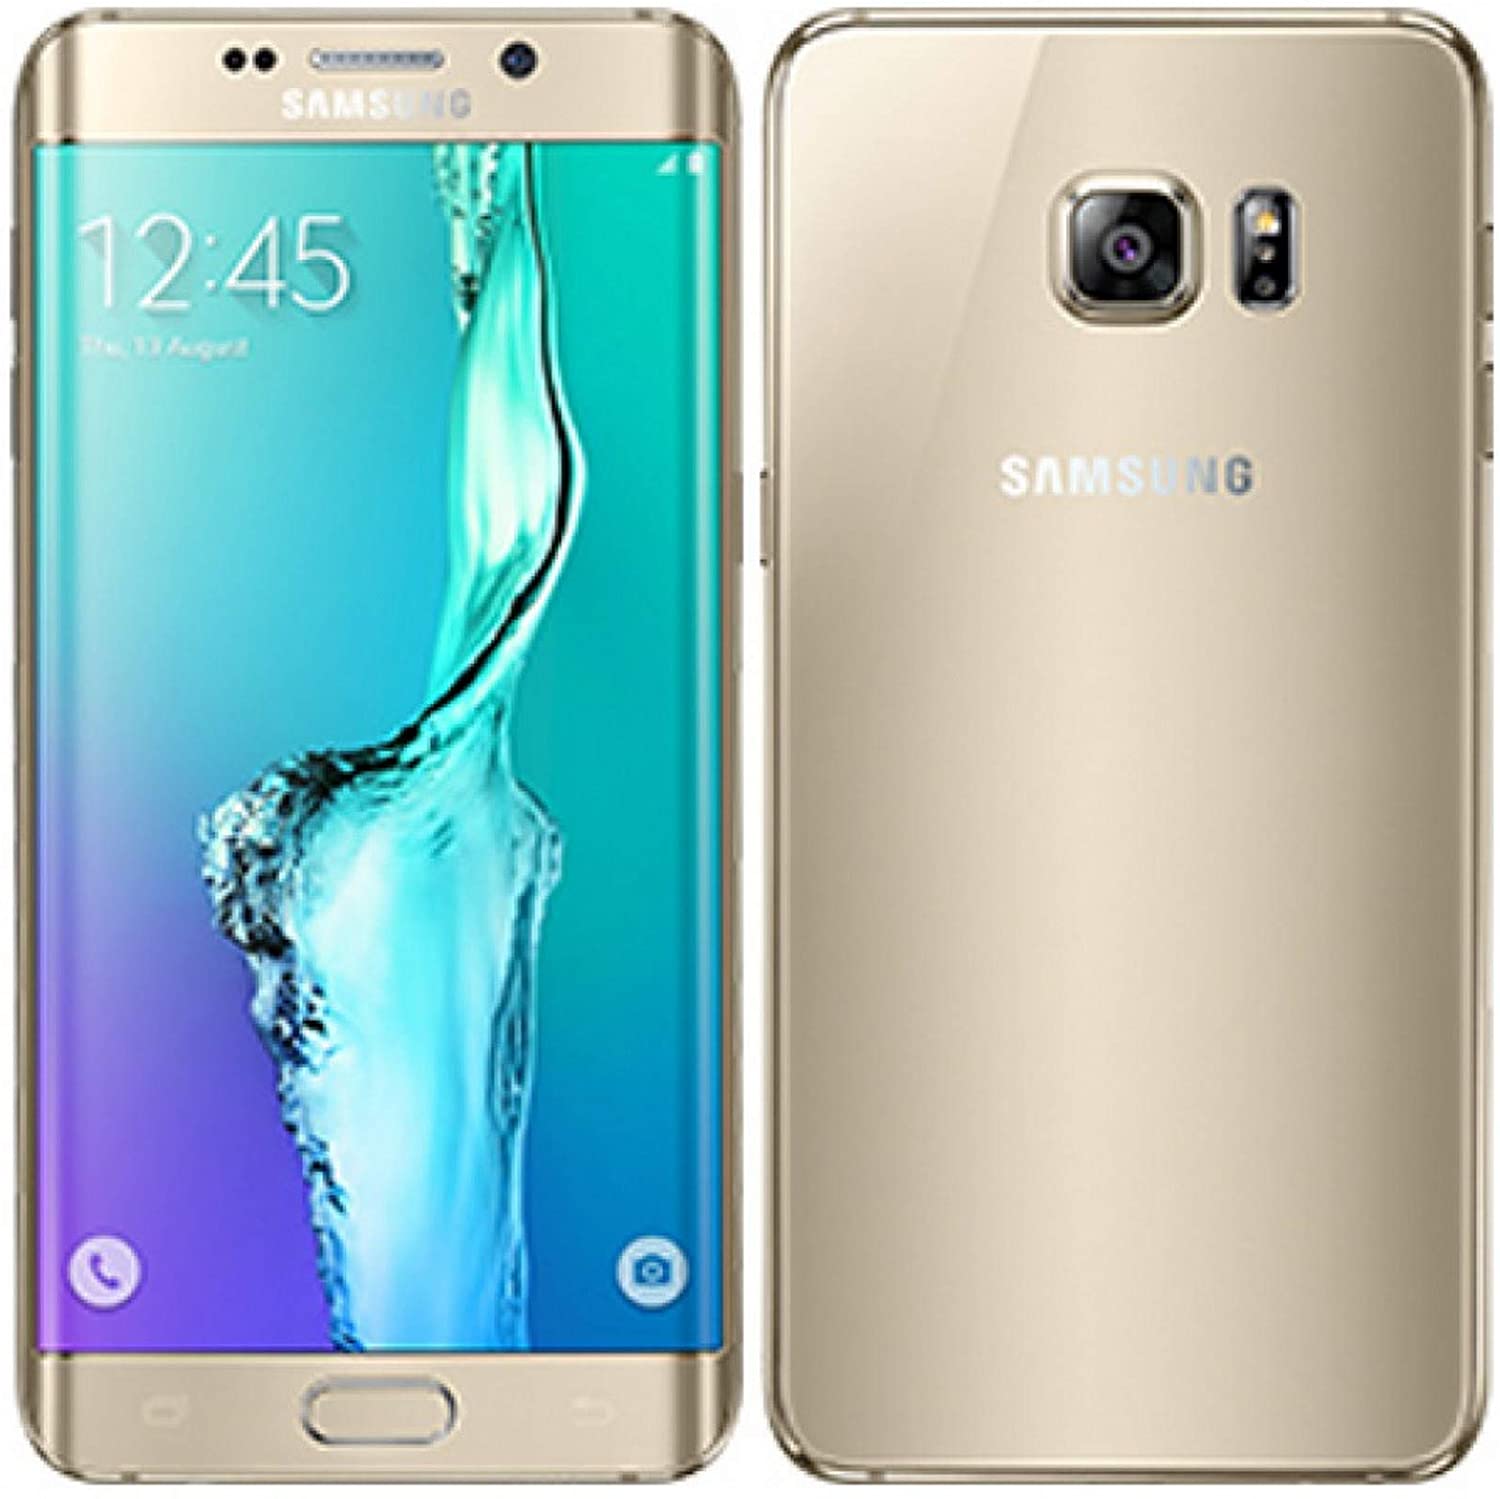 Samsung Galaxy S6 Edge Plus Media Markt